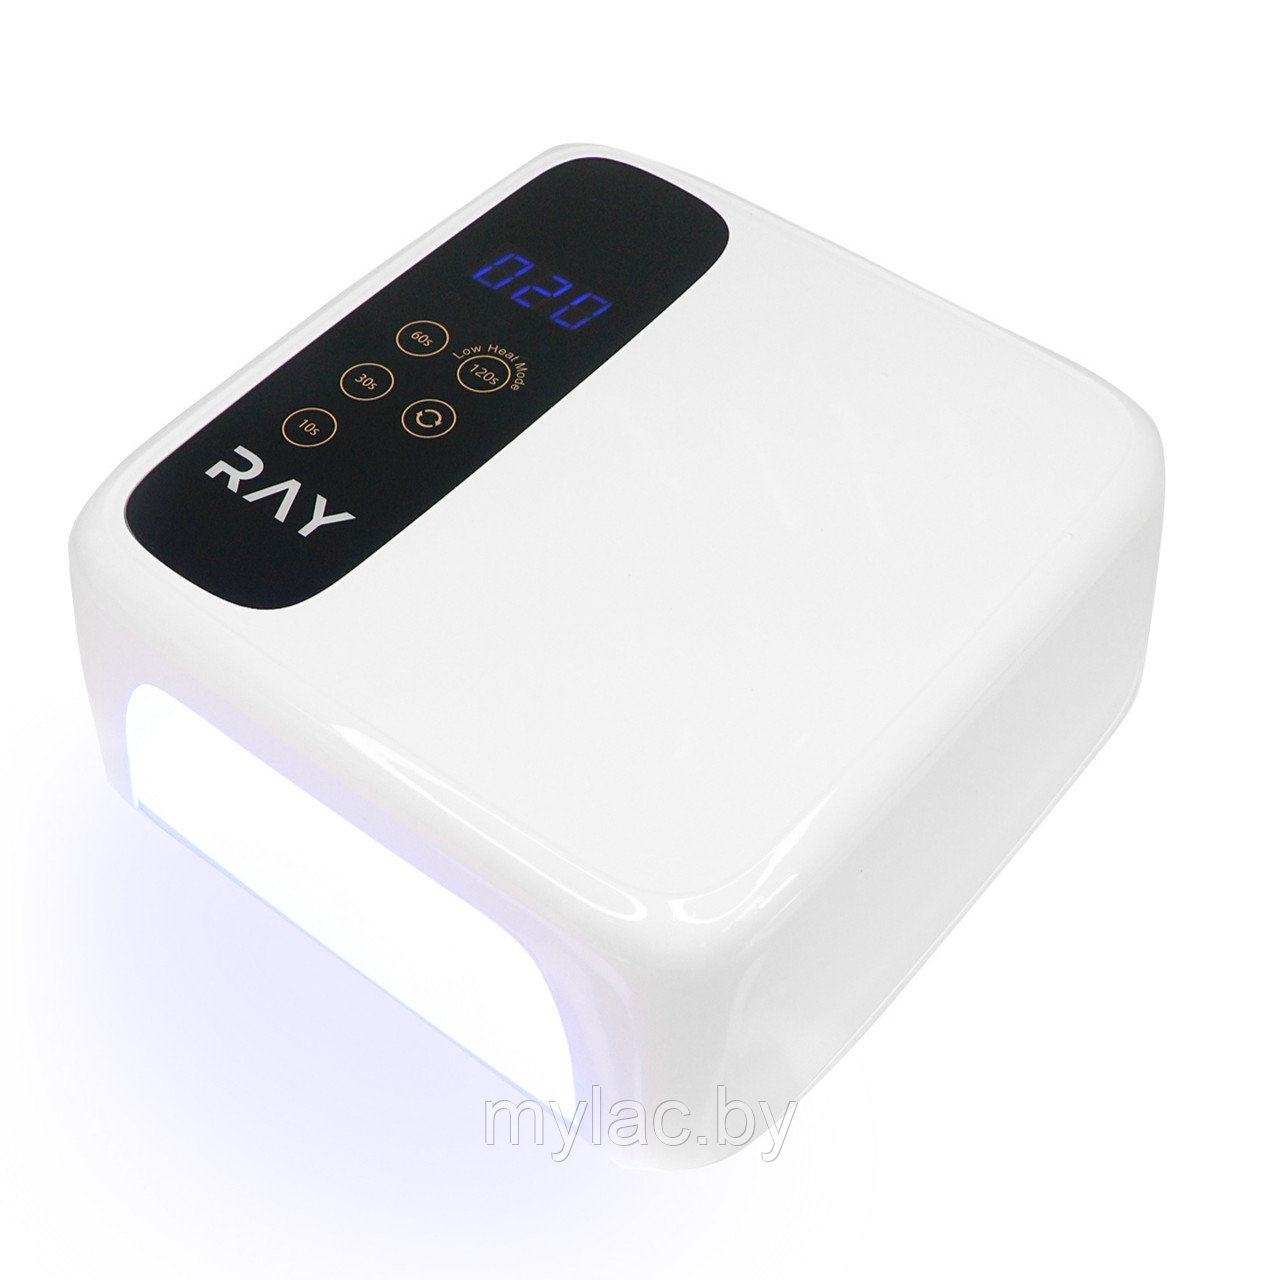 UV/LED Лампа для маникюра RAY 602pro 48Вт без аккумулятора (ОРИГИНАЛ!), цвет: белый